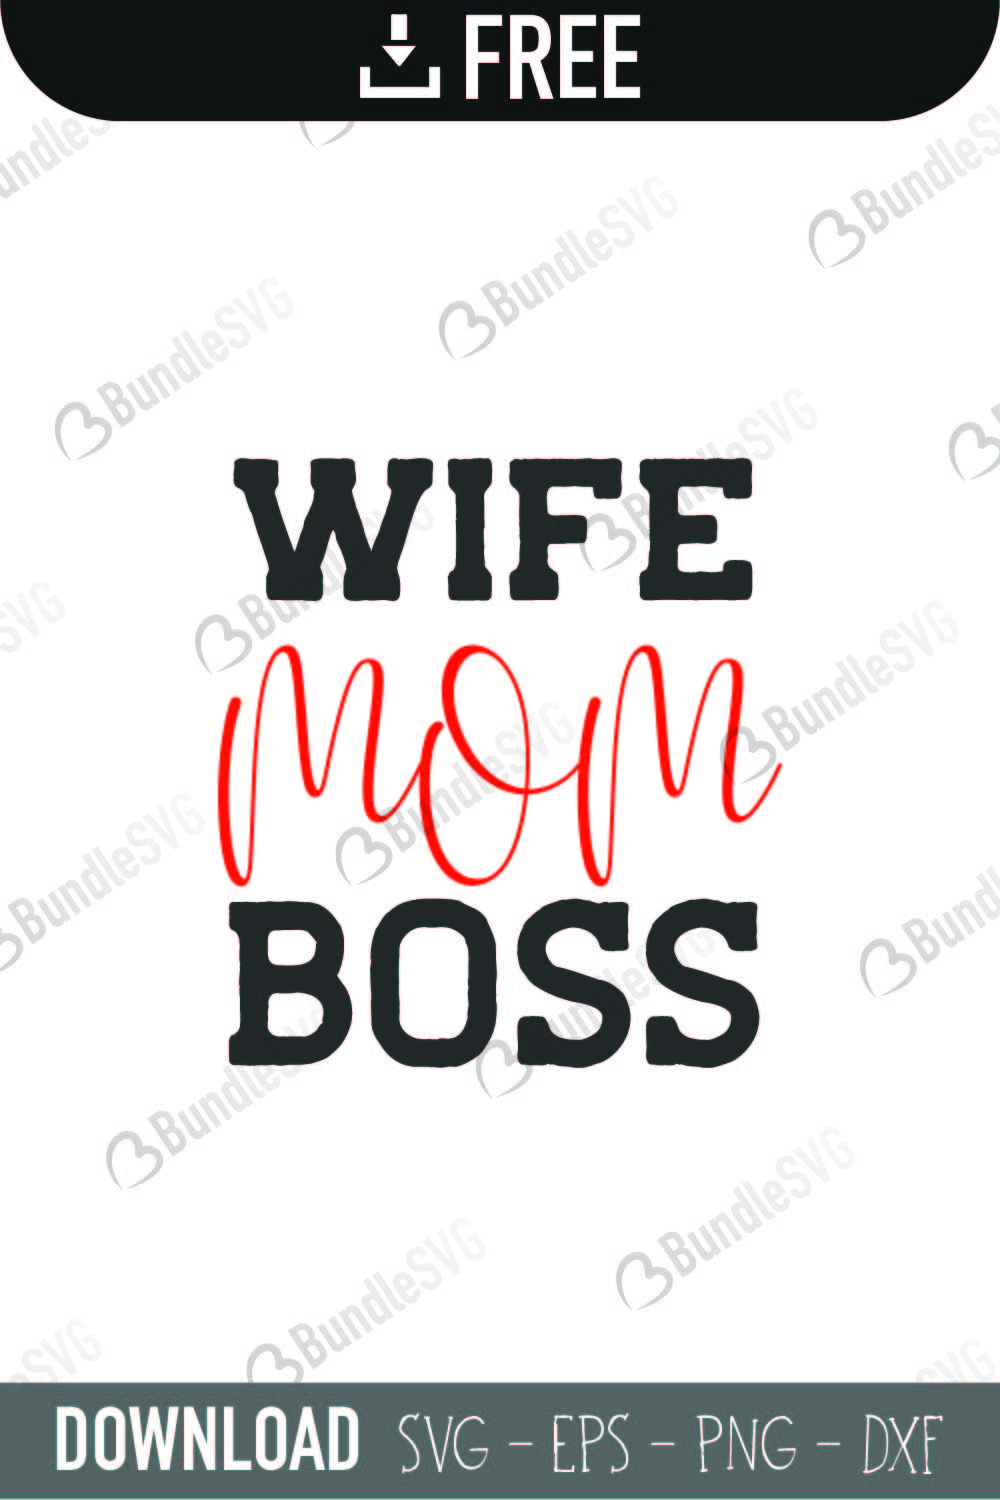 Download Wife Mom Boss Svg Cut Files Free Download Bundlesvg